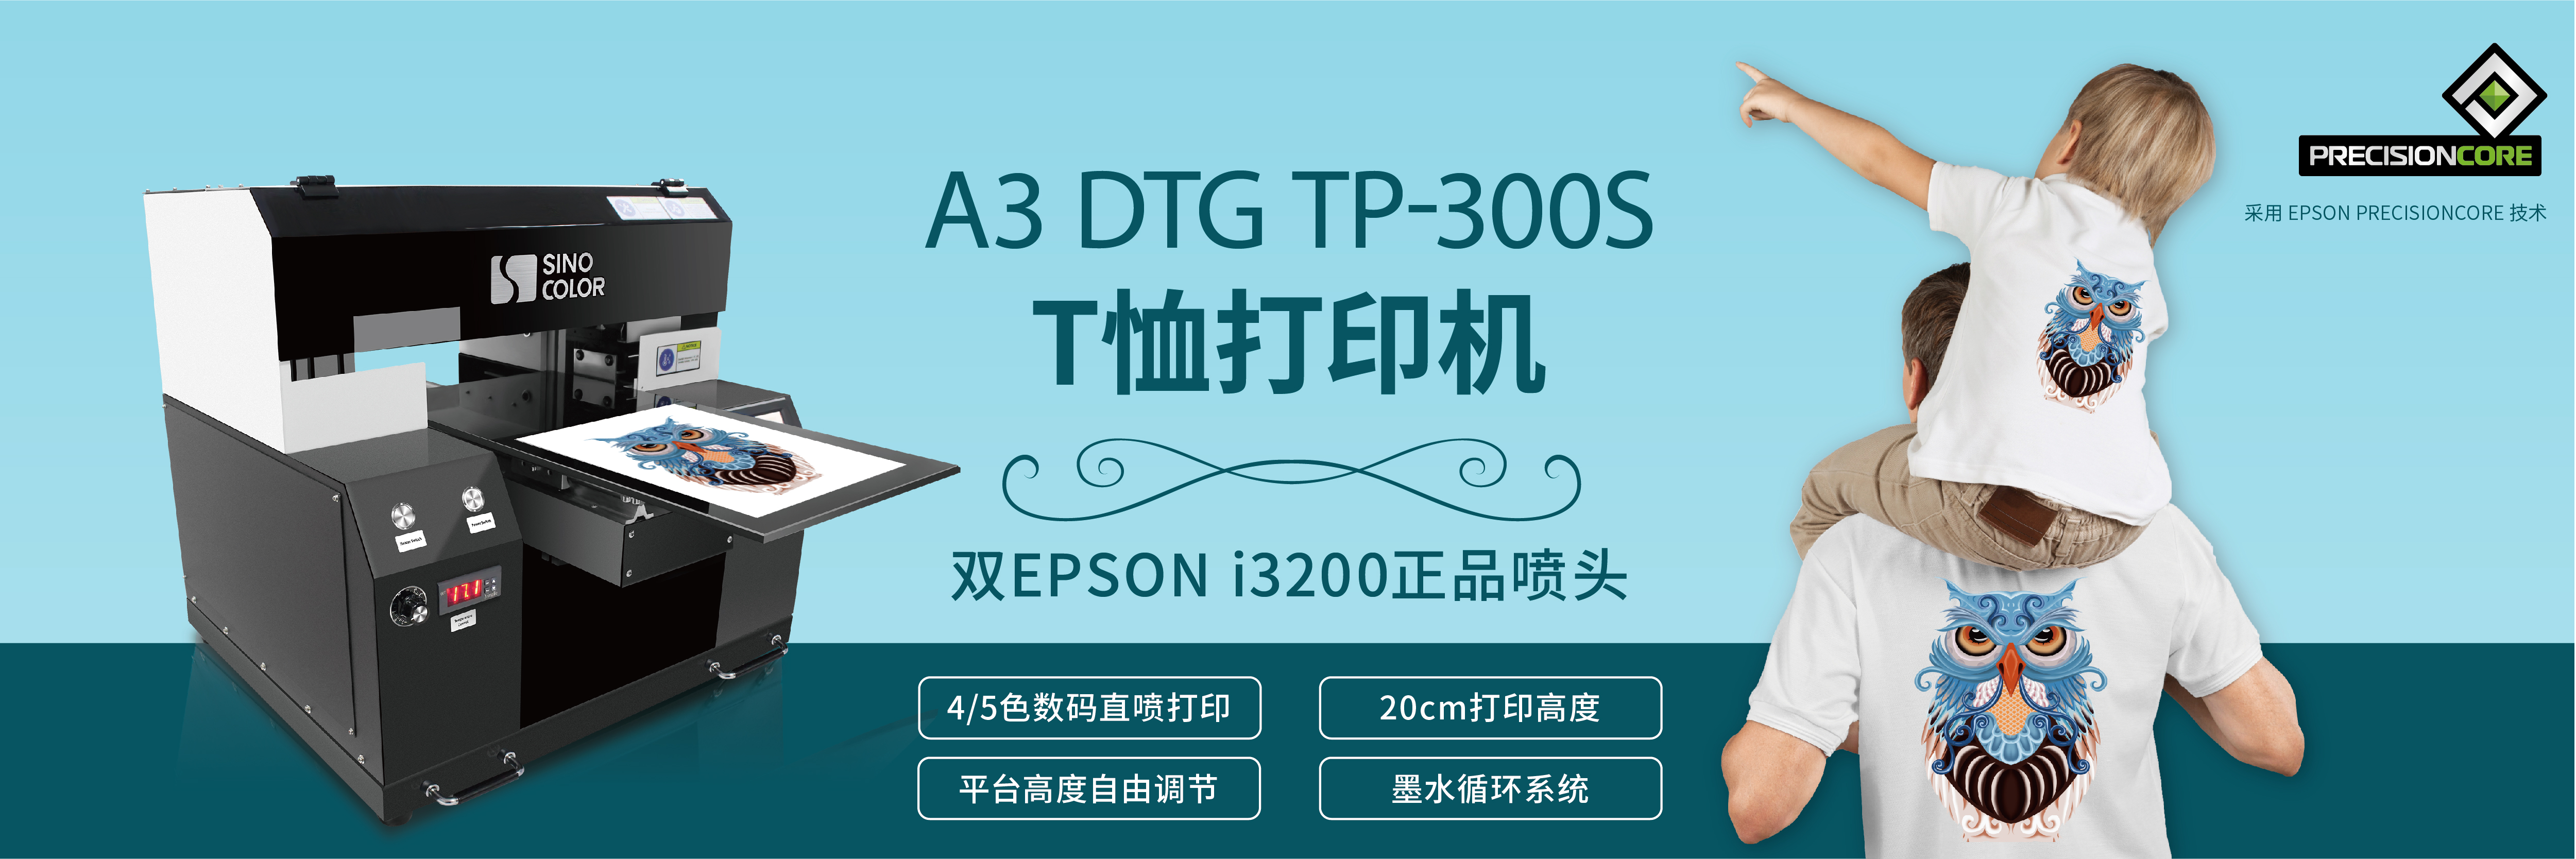 T恤打印机 TP-300S image